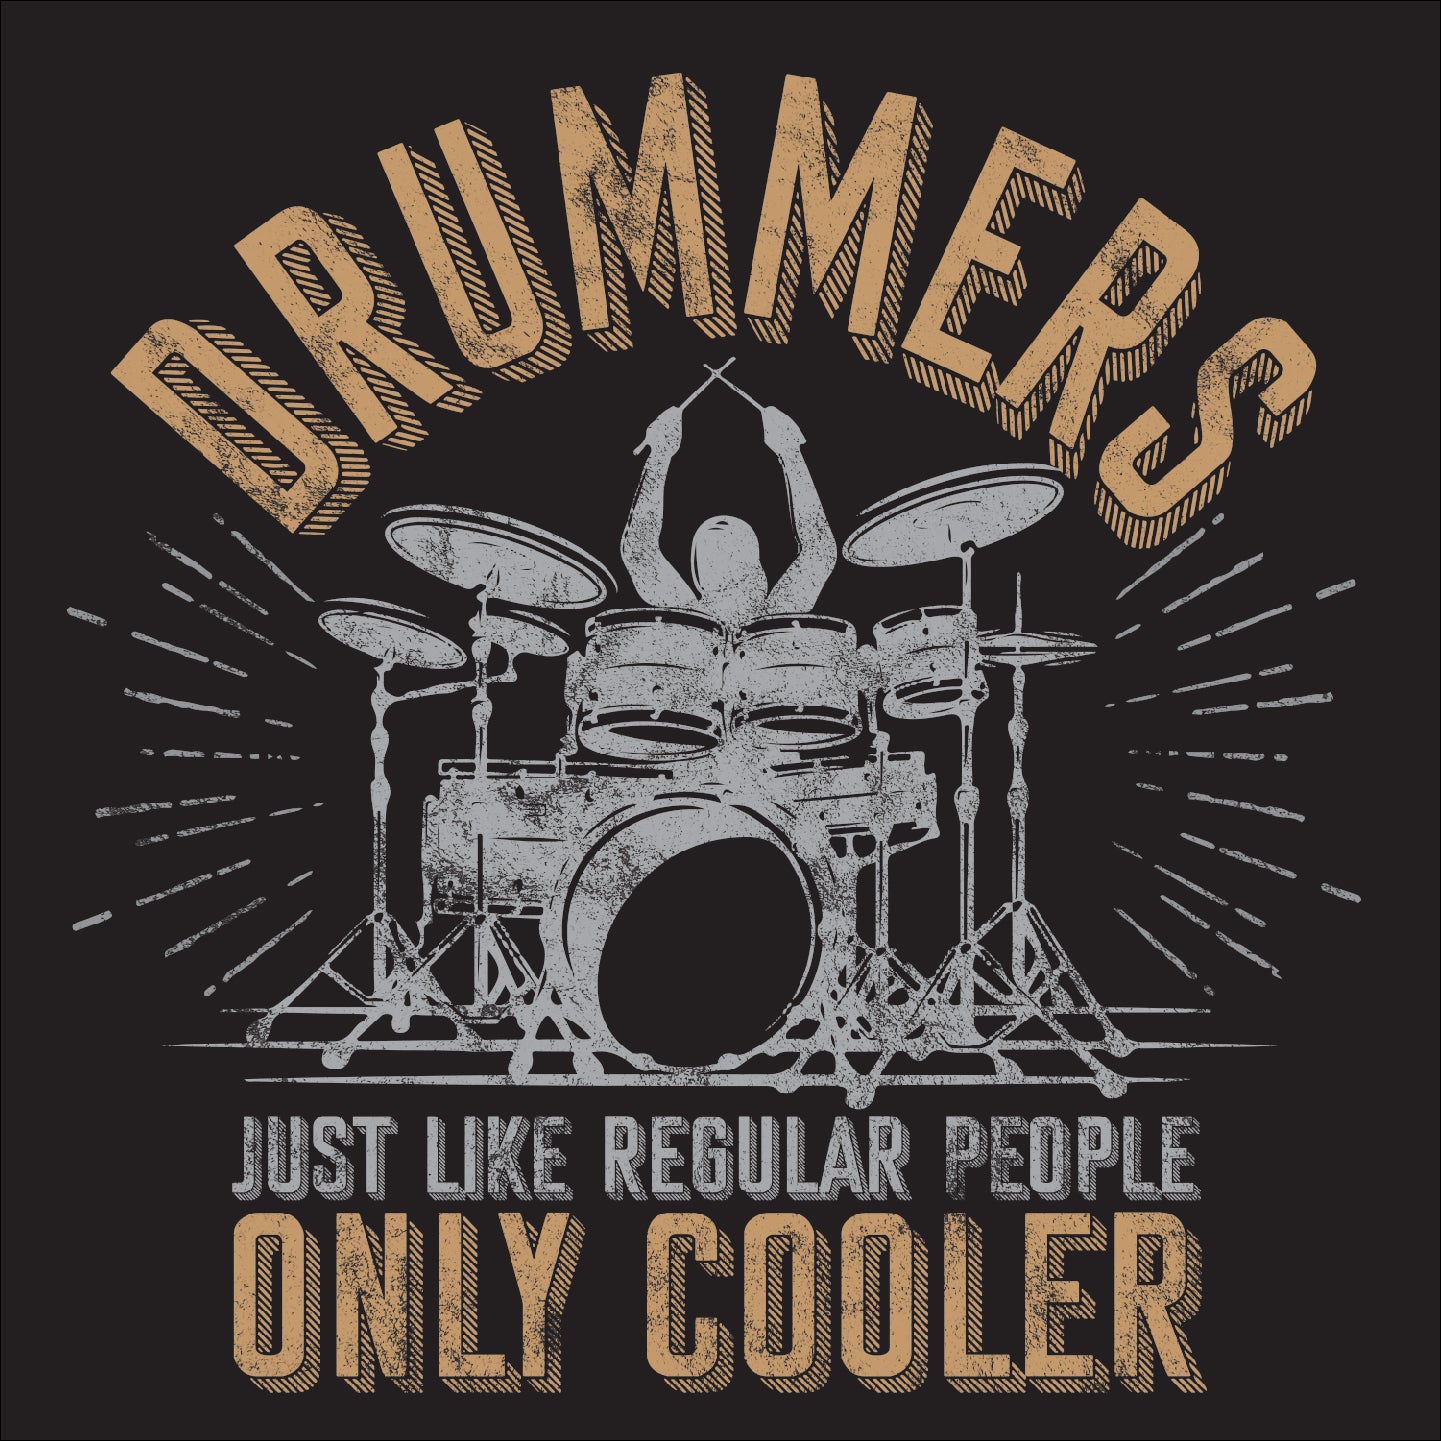 Drummers, just like regular people only cooler